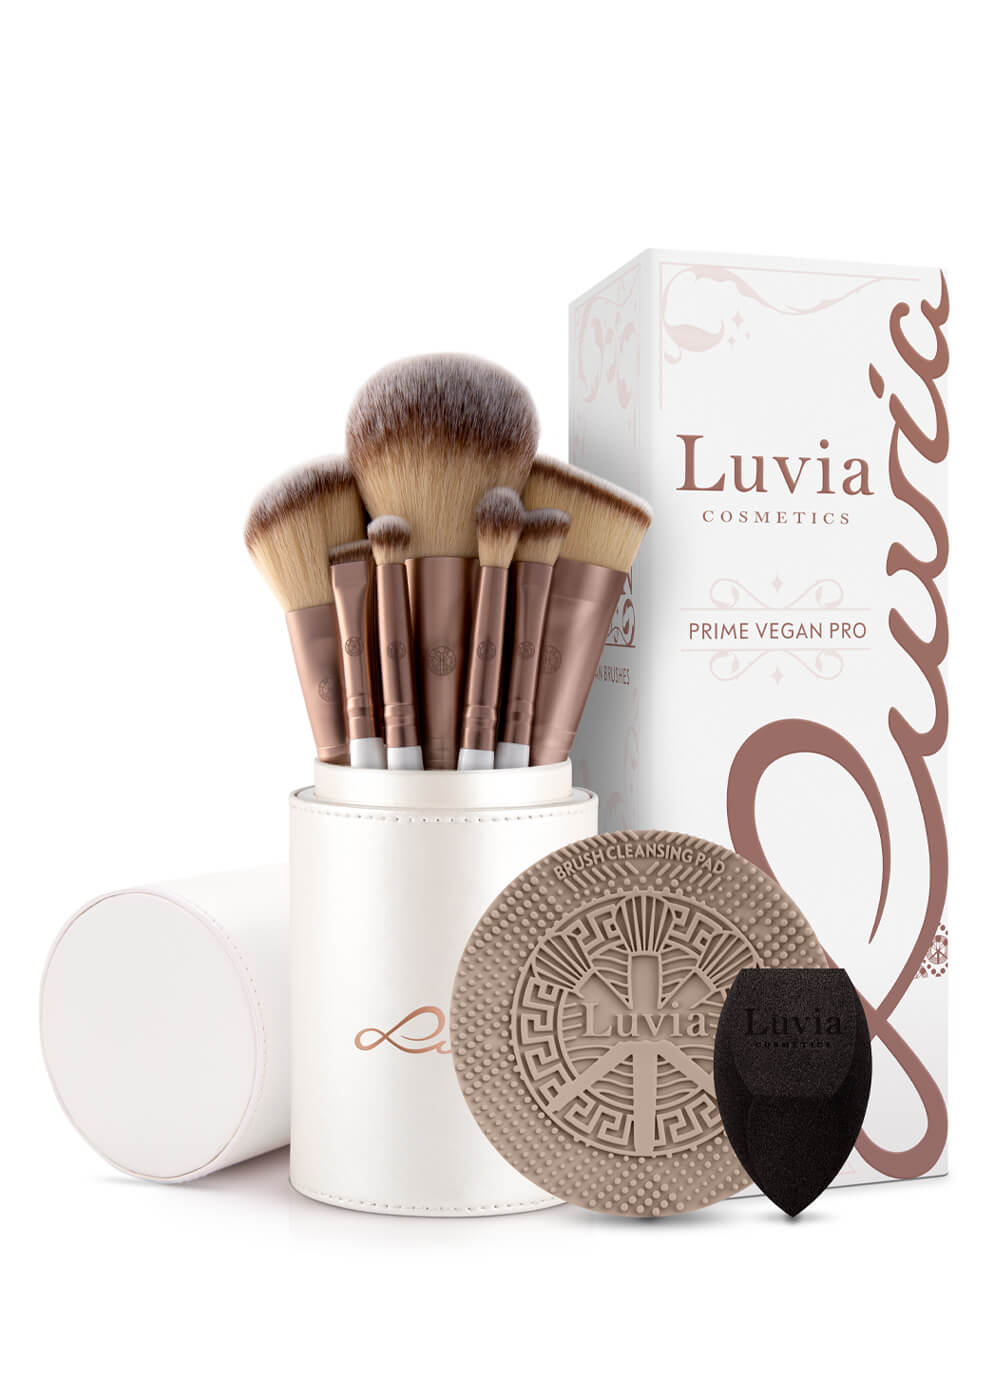 Pro Luvia Vegan – Prime Cosmetics